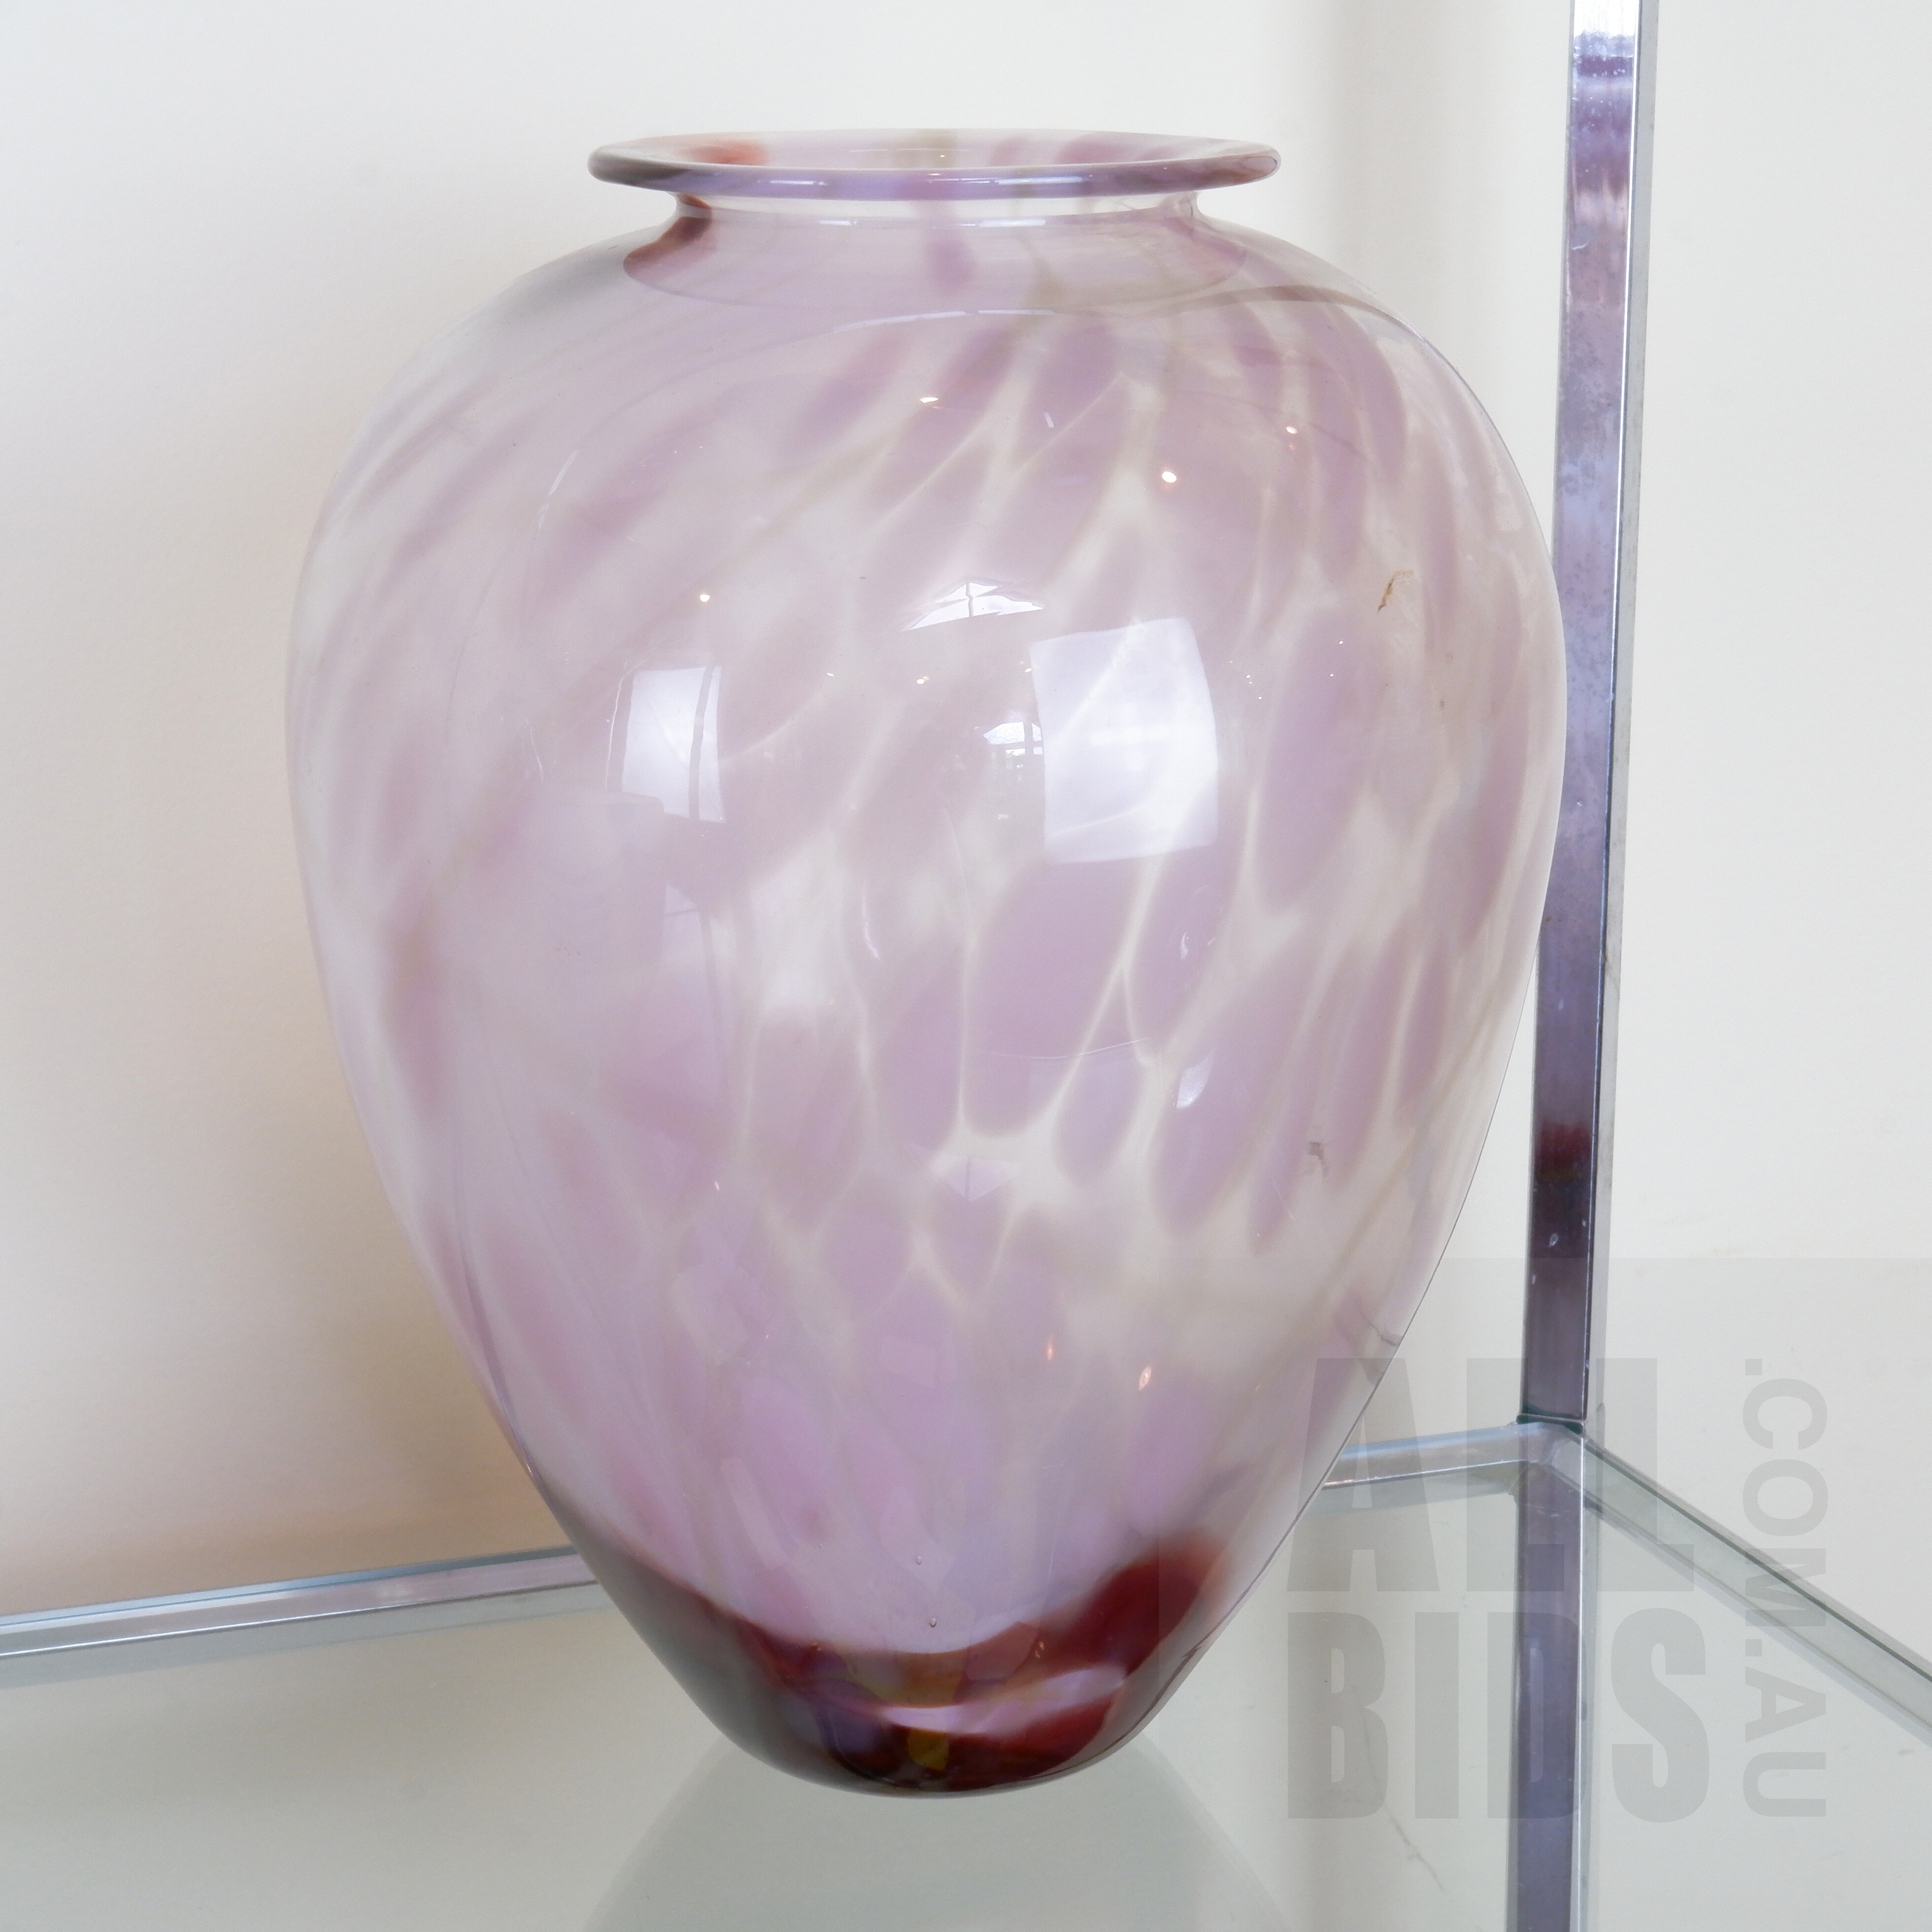 'Nicholas Mount (1952) Budgeree 1987, Studio Glass Vase'